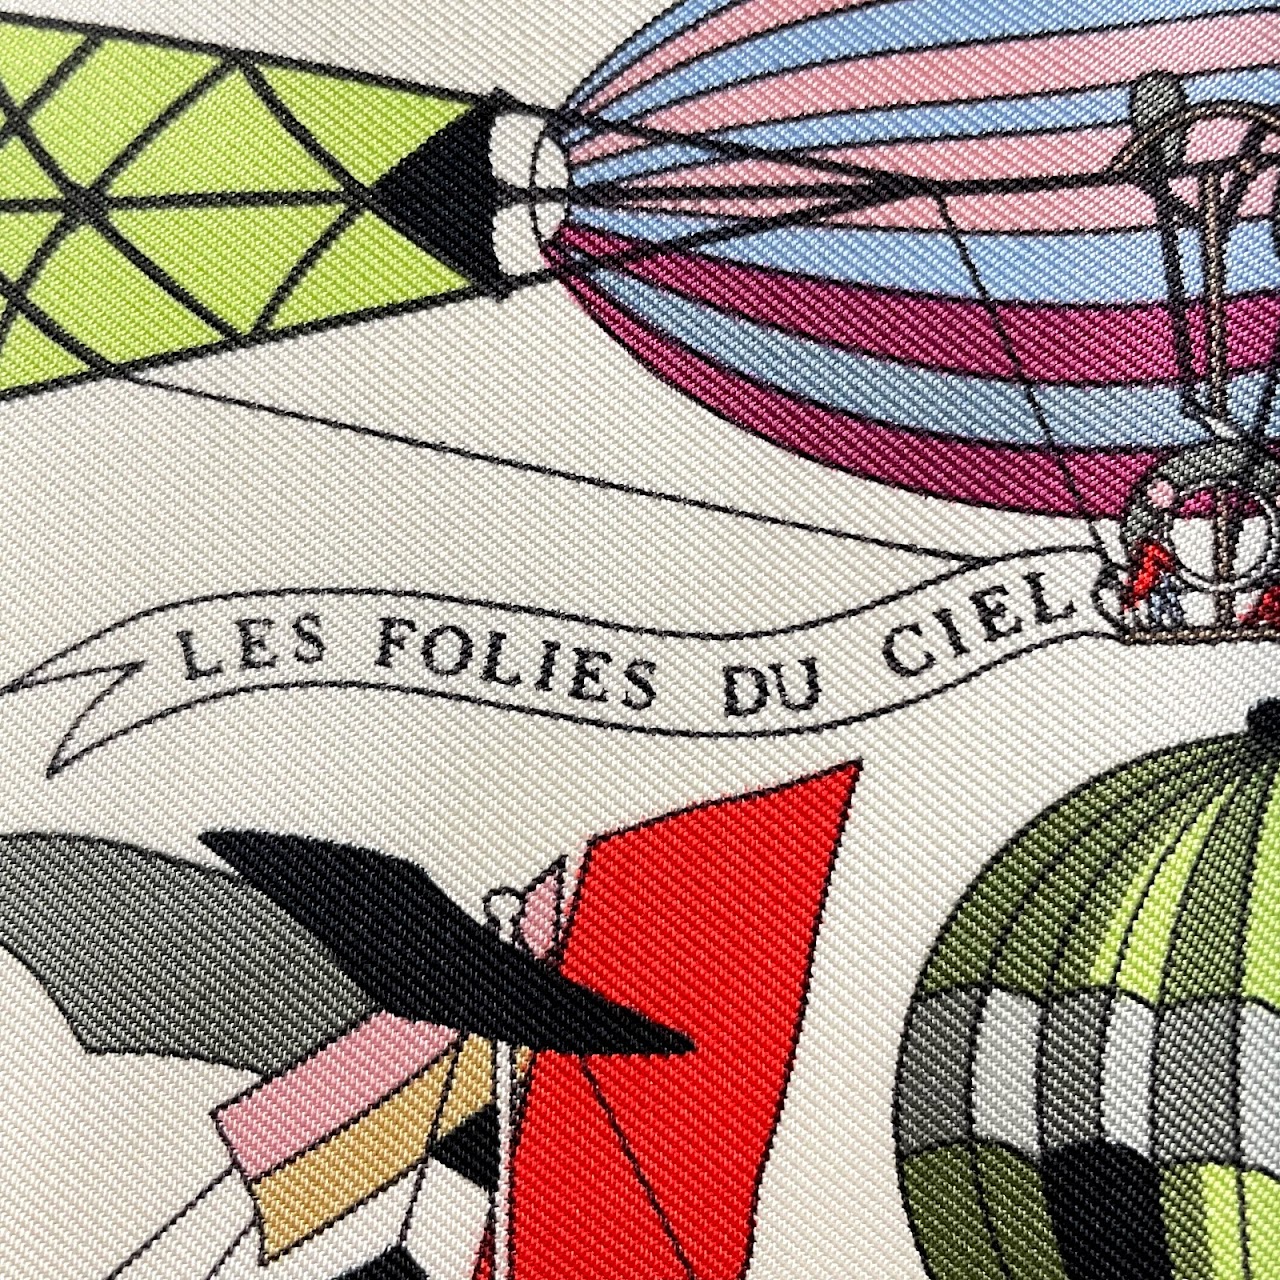 Hermès Les Folies Du Ciel Silk Pocket Square